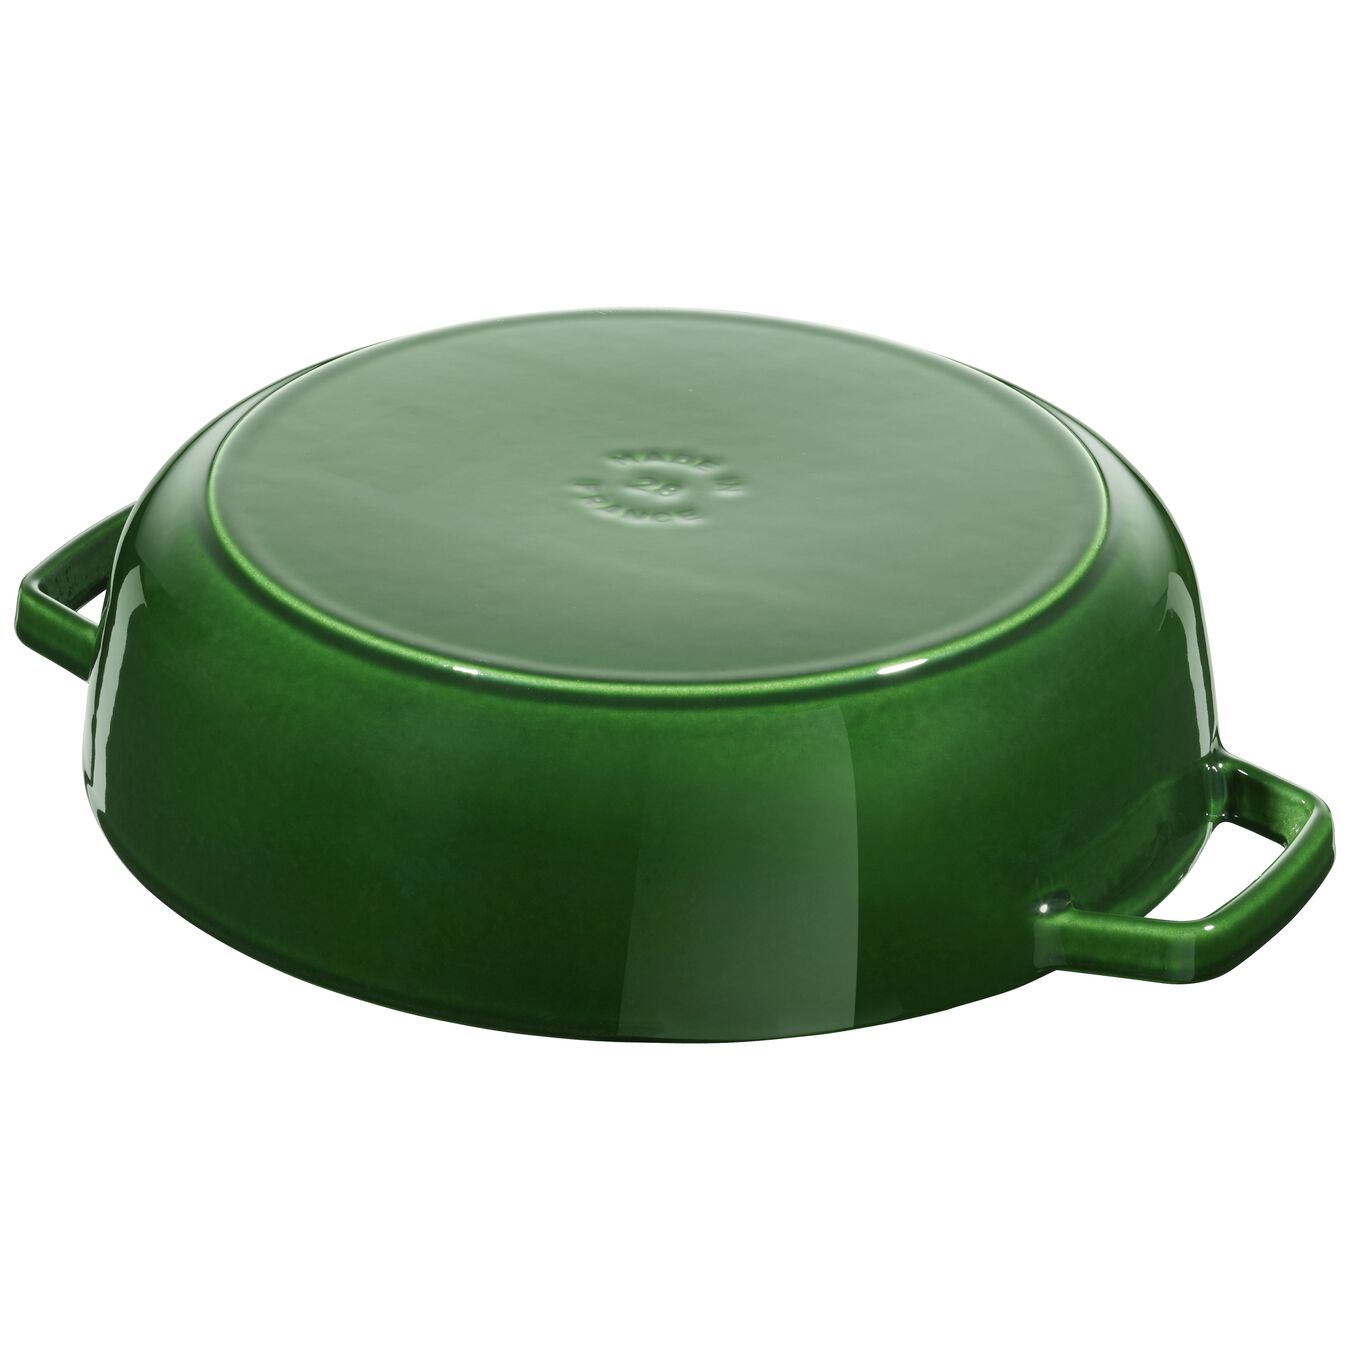 2.5 l cast iron round Saute pan Chistera, basil-green,,large 6